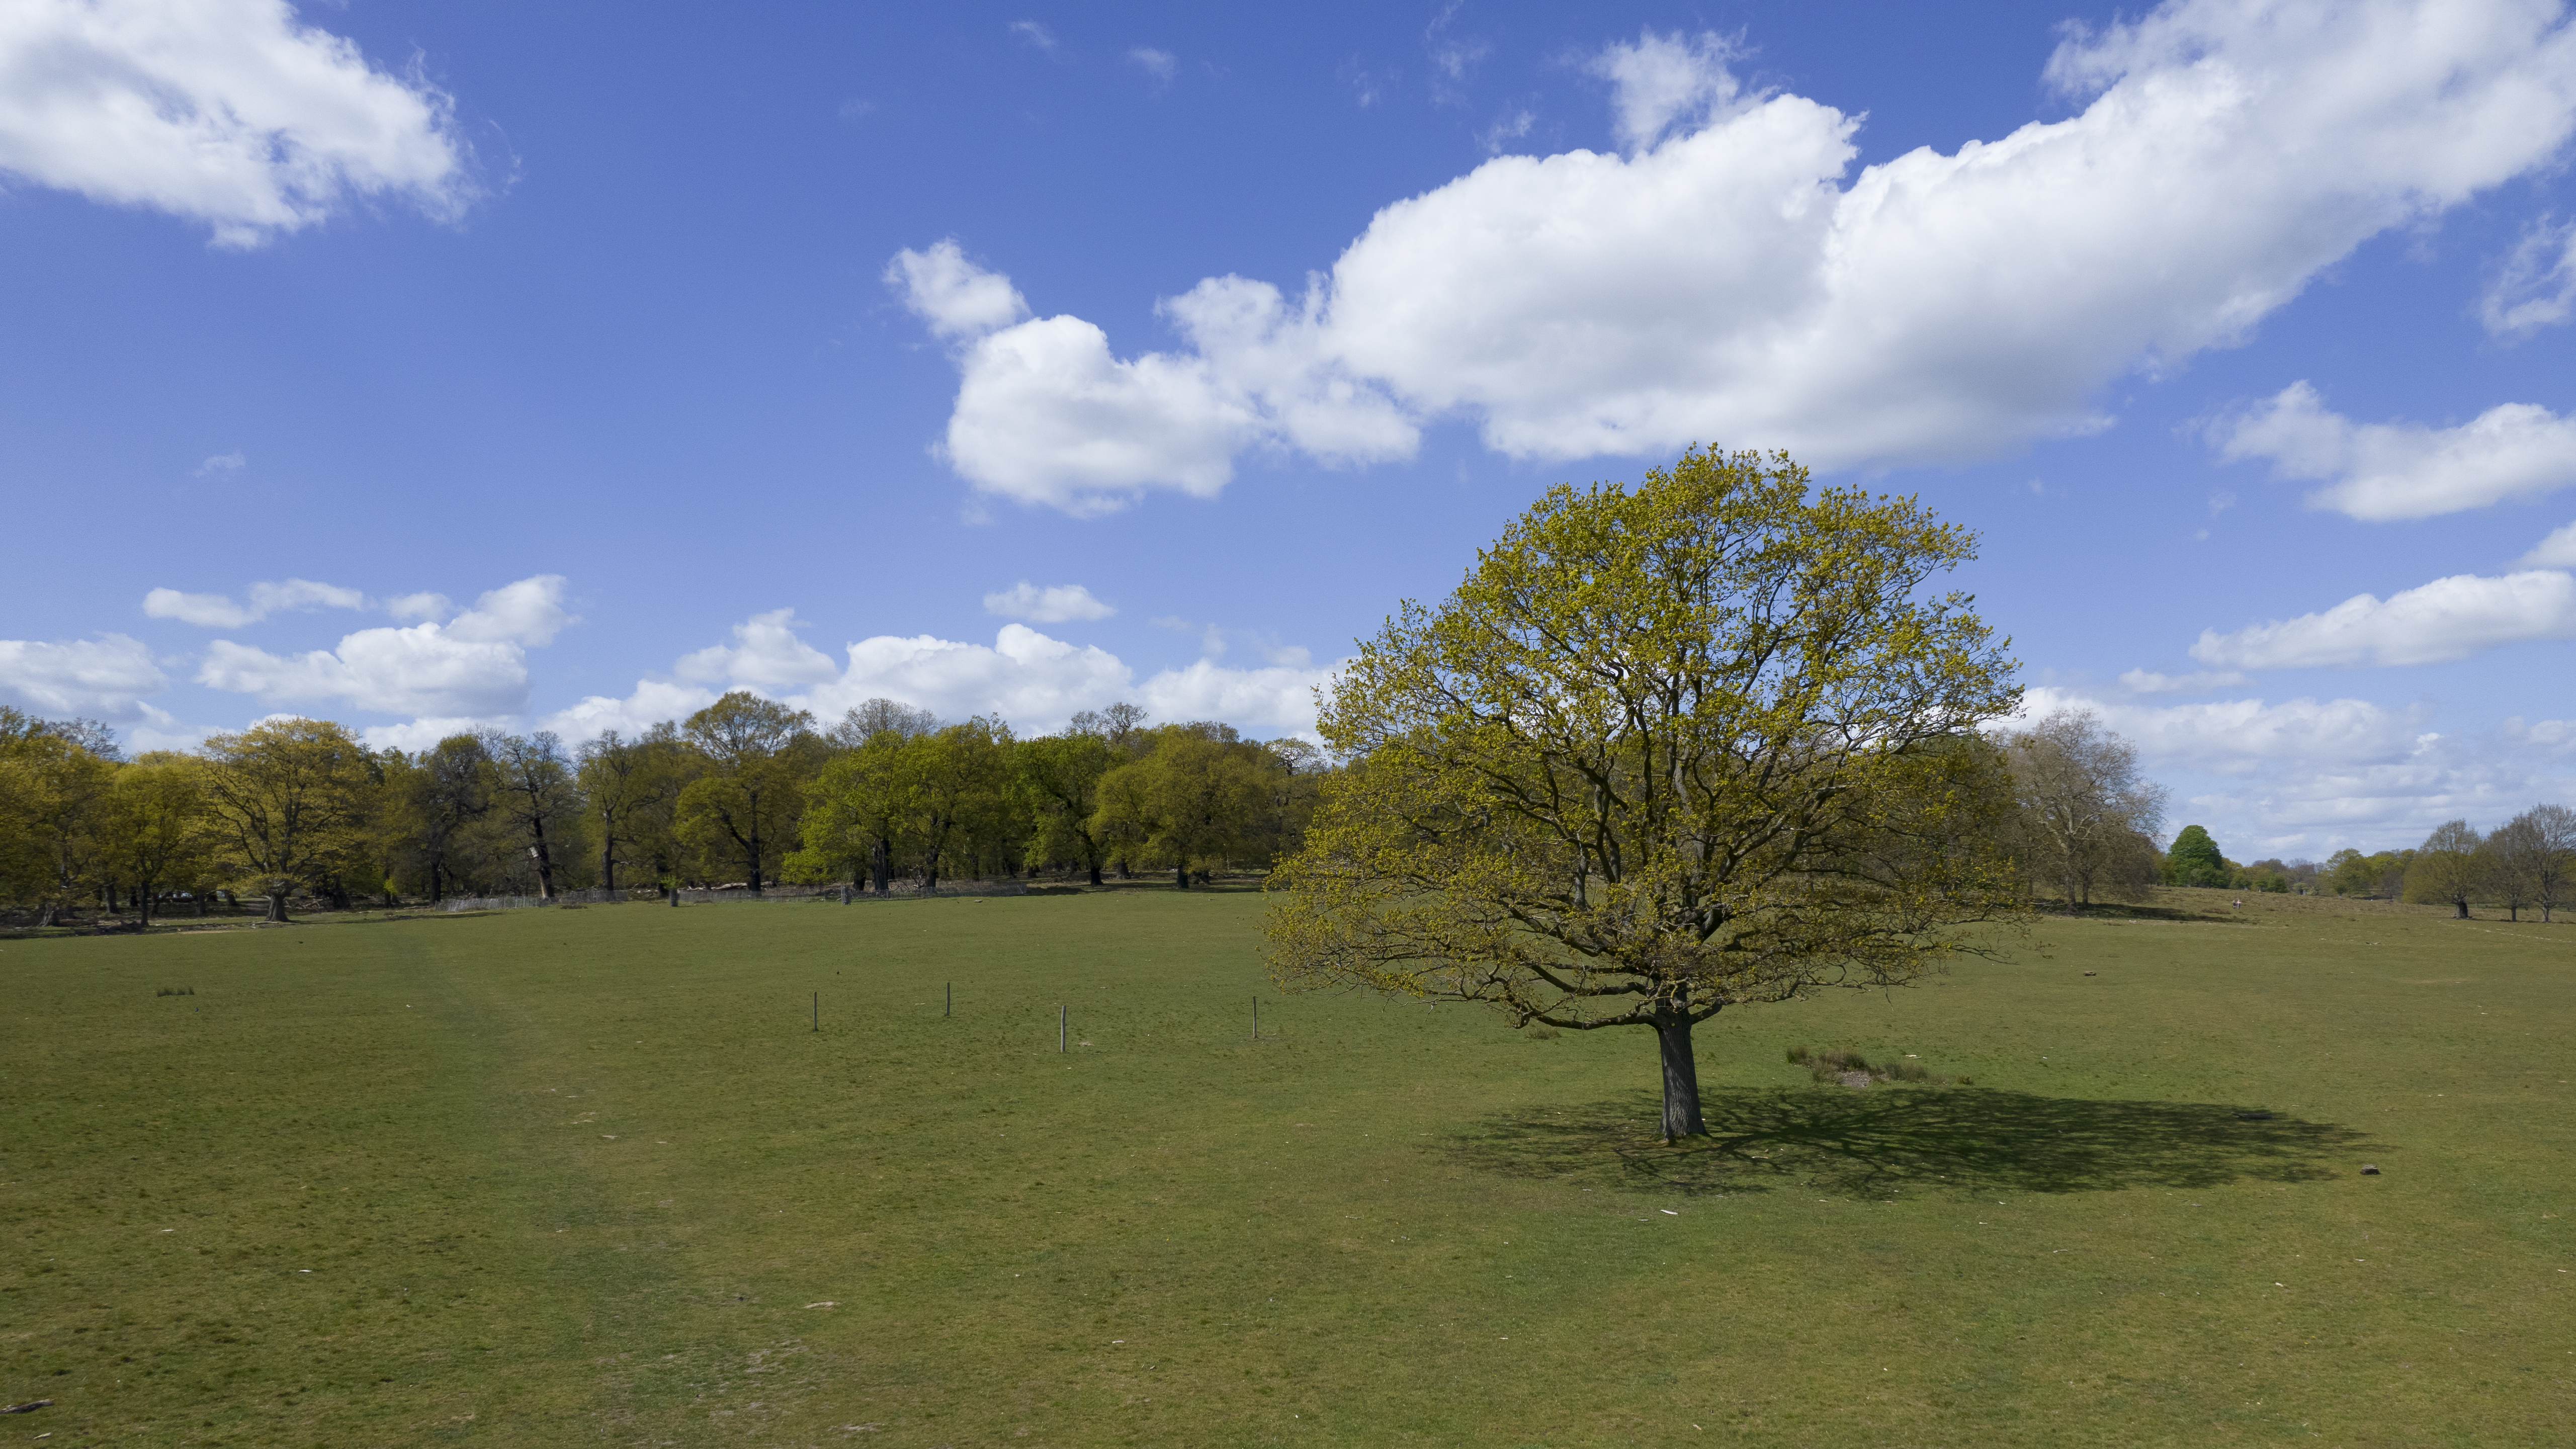 Landscape scene with tree, 1/3200s, f/2.8, ISO100, 8mm, Angela Nicholson